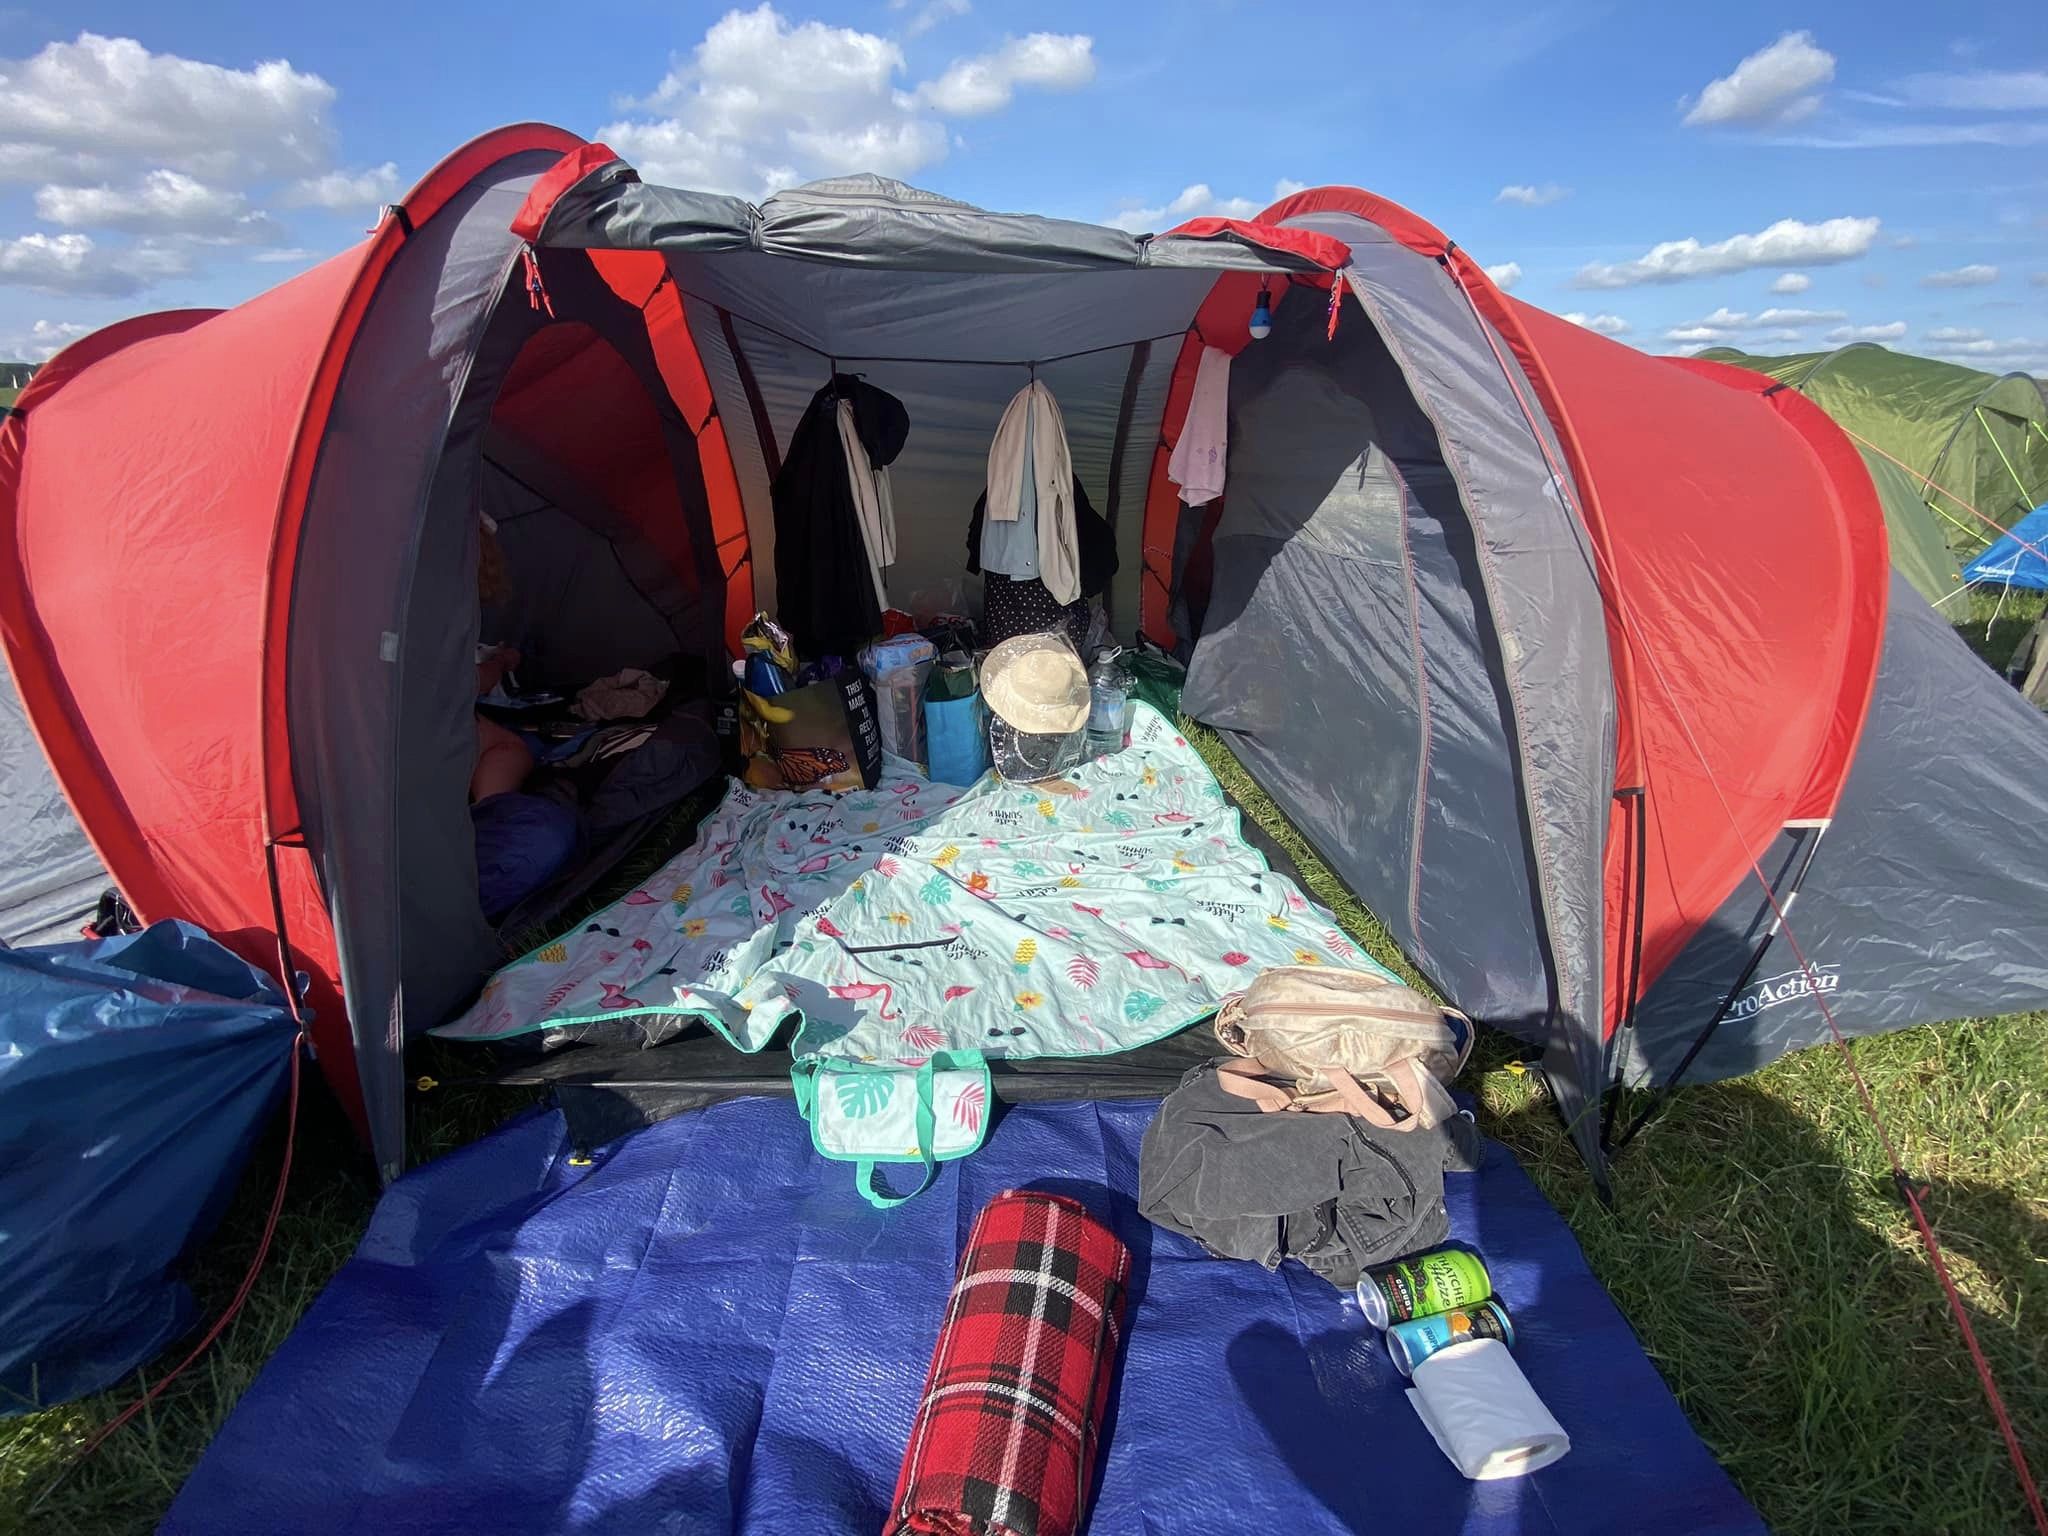 Our tent setup at Glastonbury Festival